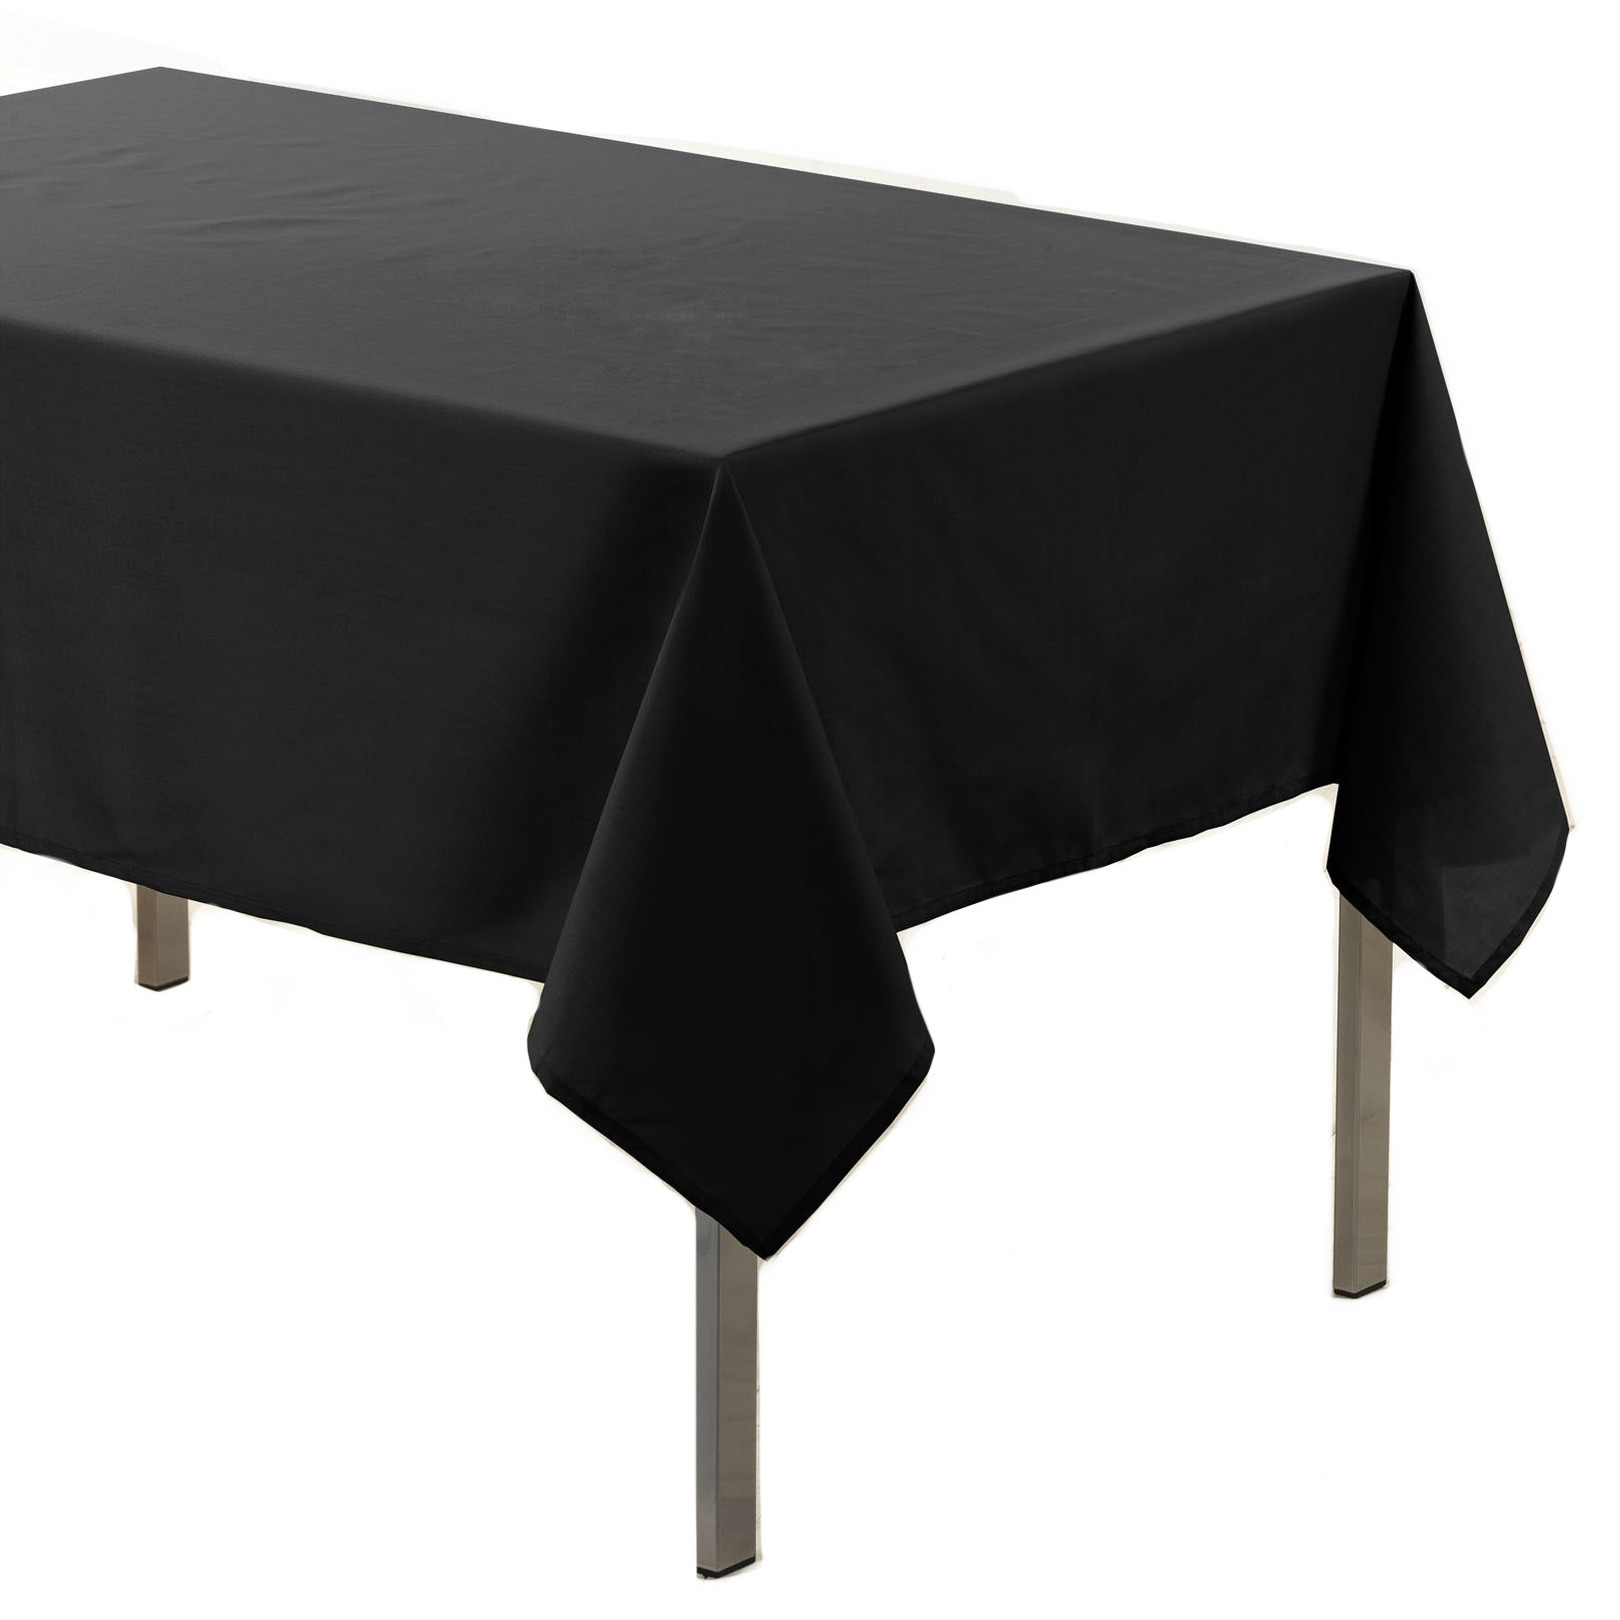 Tafelkleed-tafellaken zwart 140 x 250 cm textiel-stof